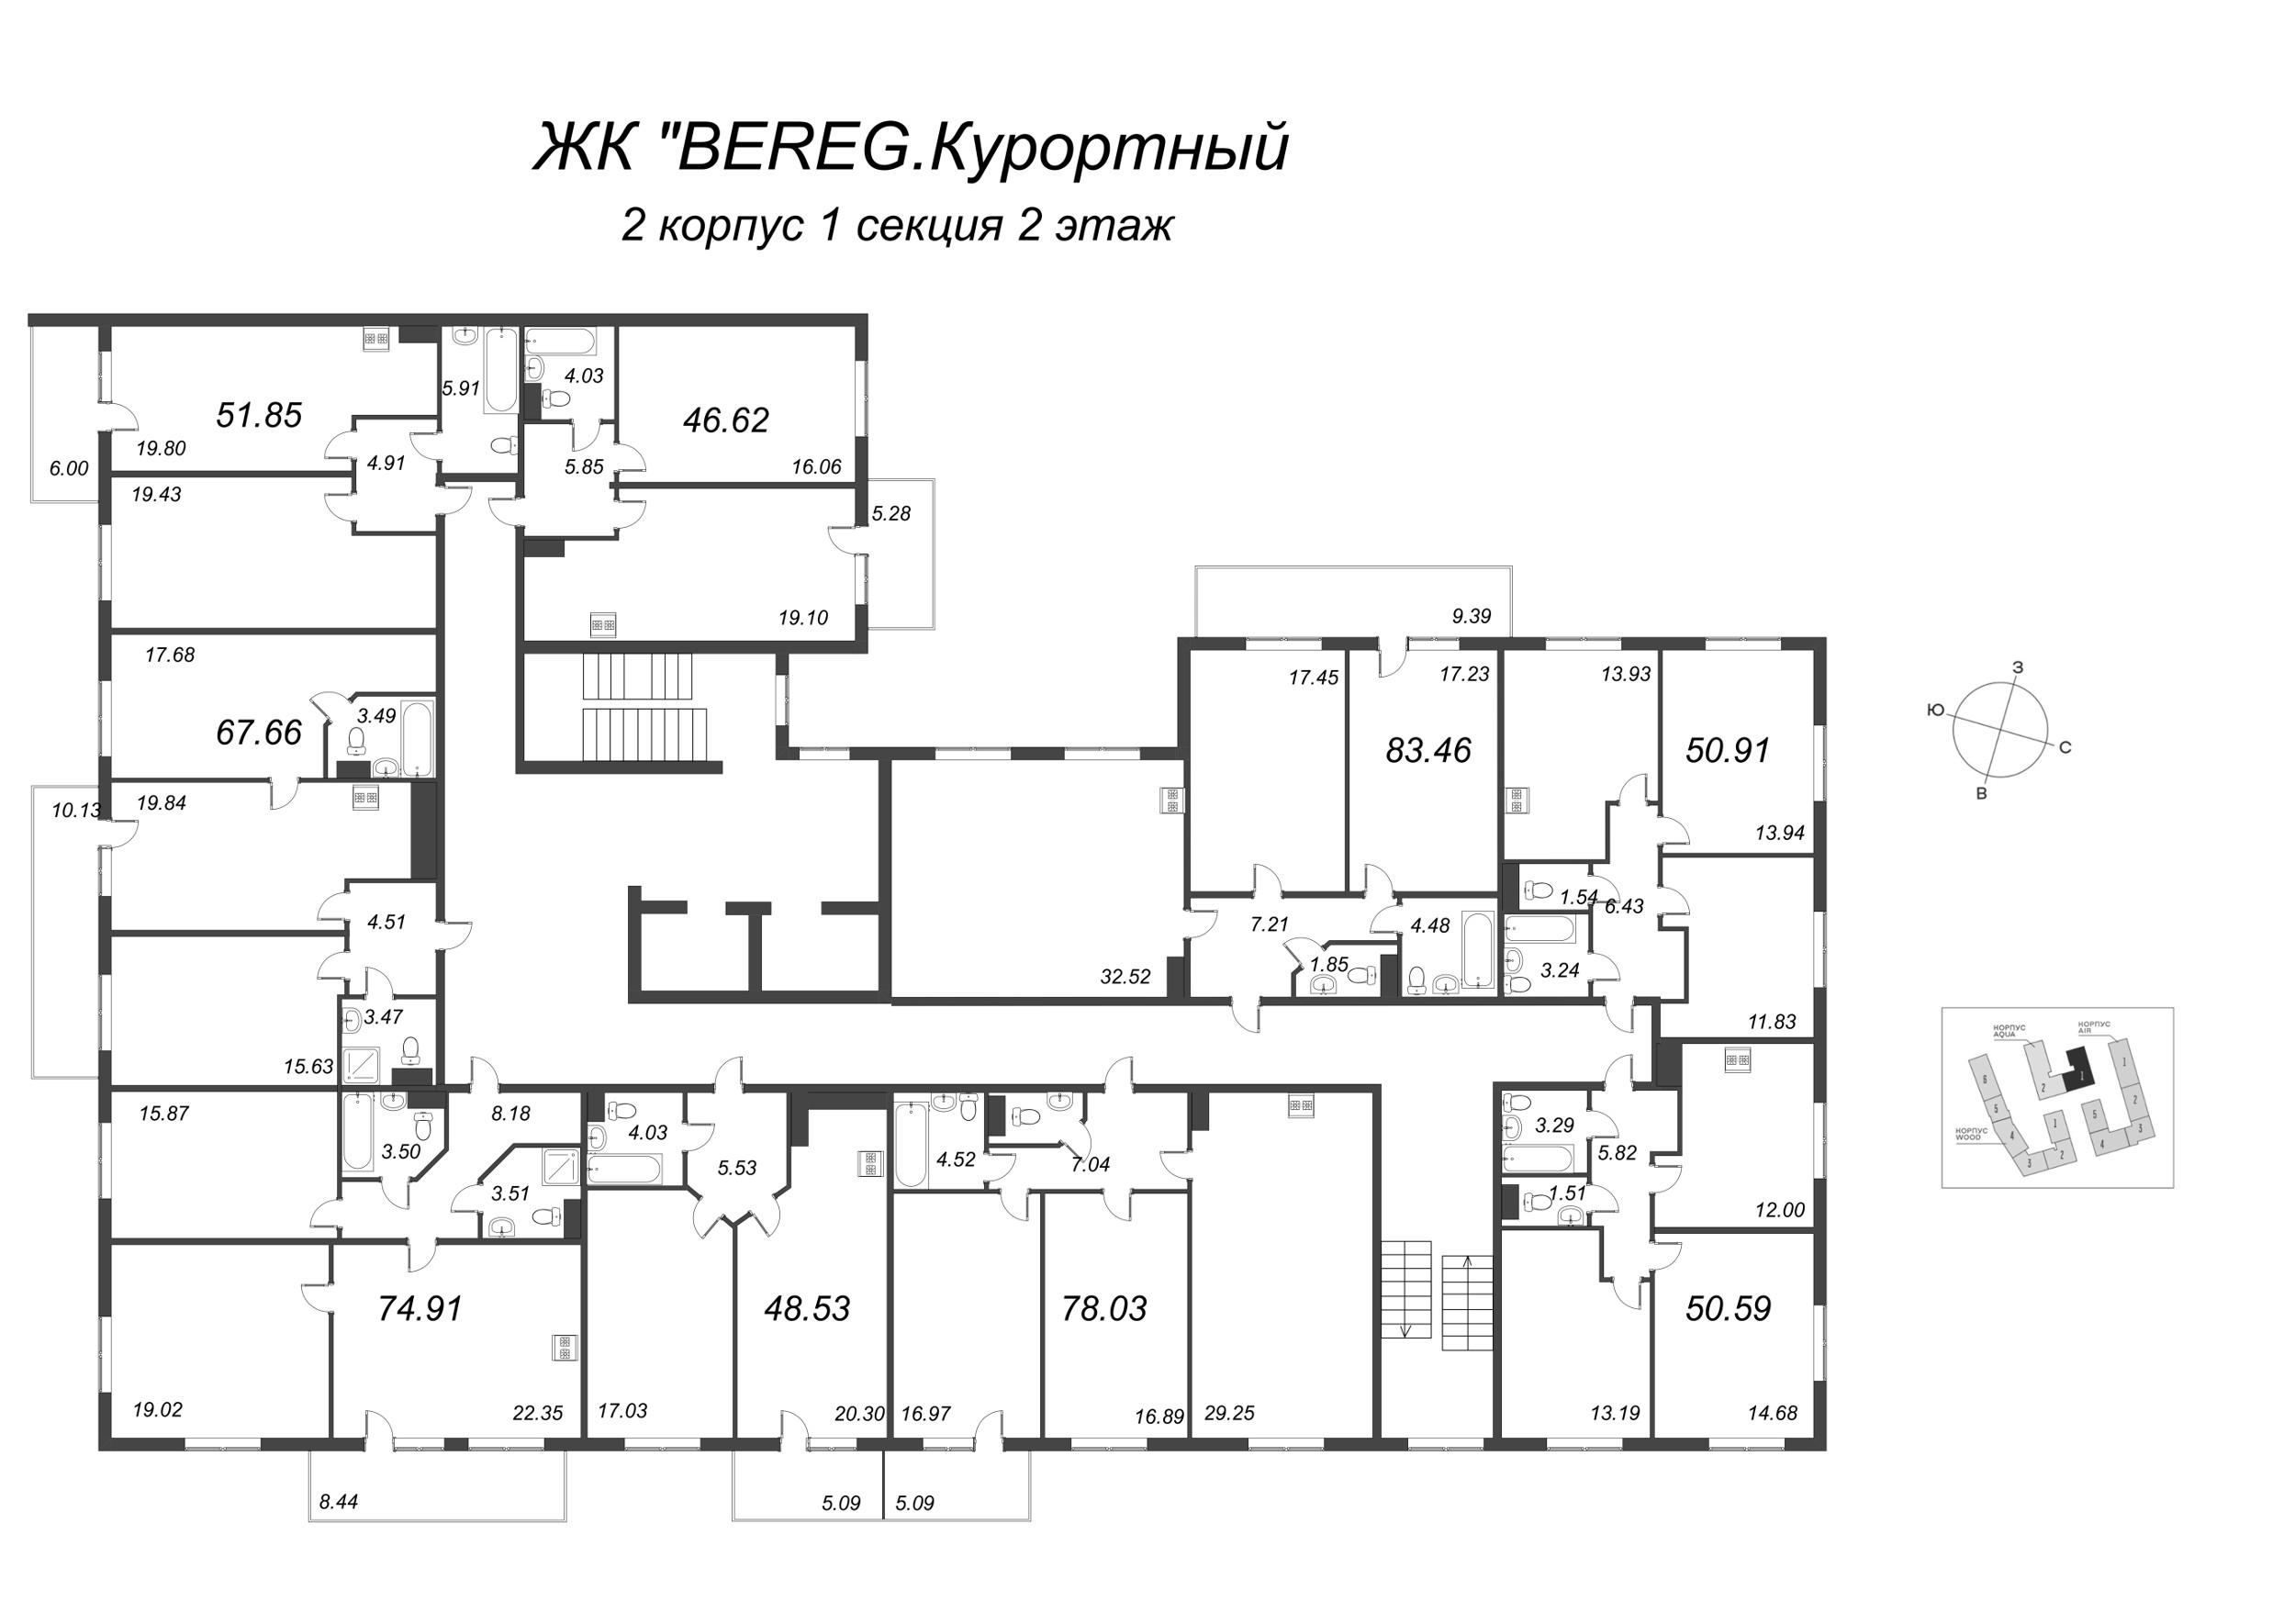 3-комнатная (Евро) квартира, 83.46 м² - планировка этажа